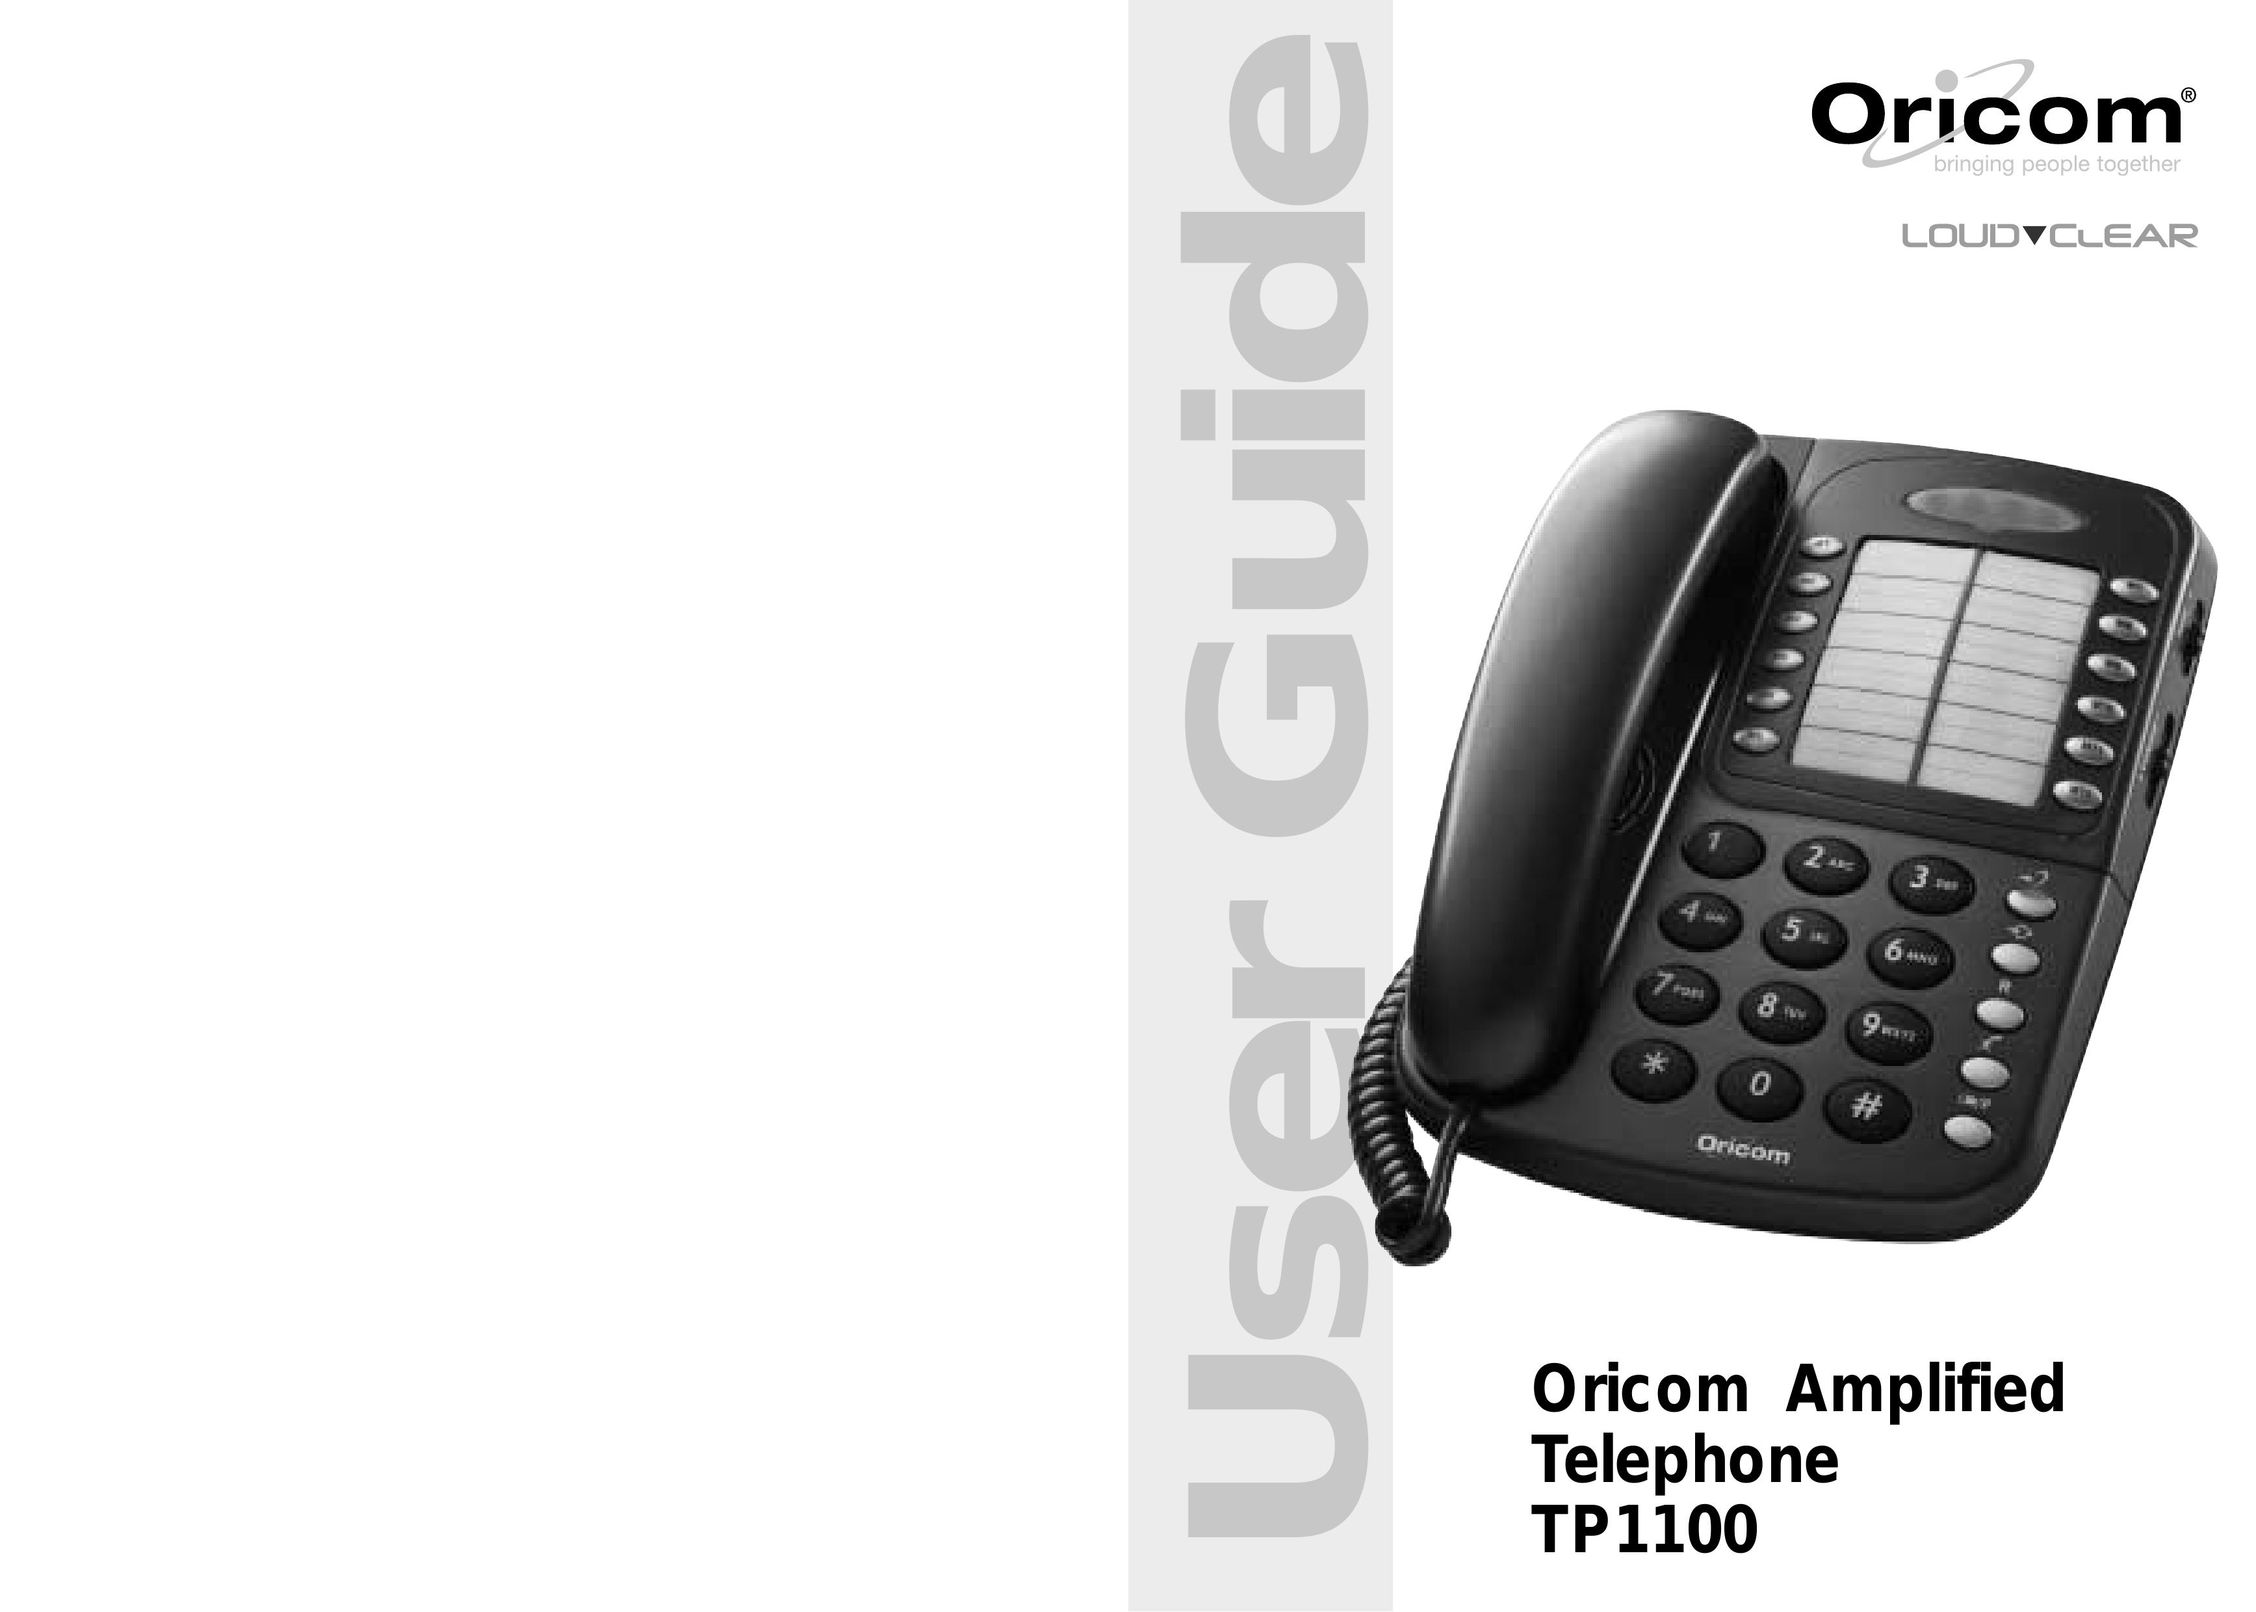 Oricom TP1100 Telephone User Manual